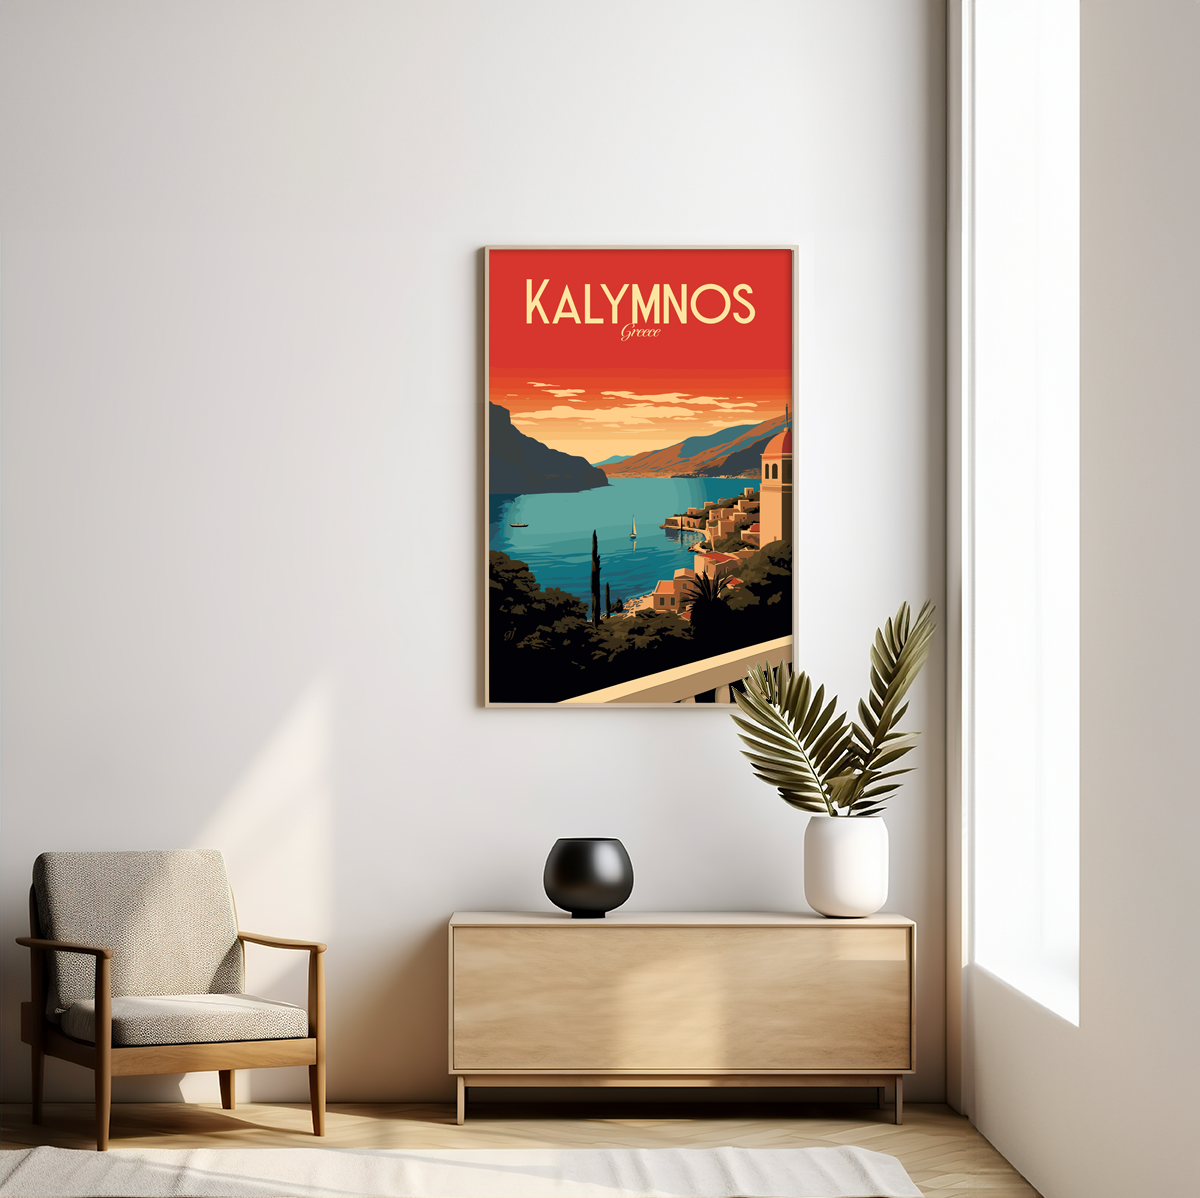 Kalymnos poster by bon voyage design